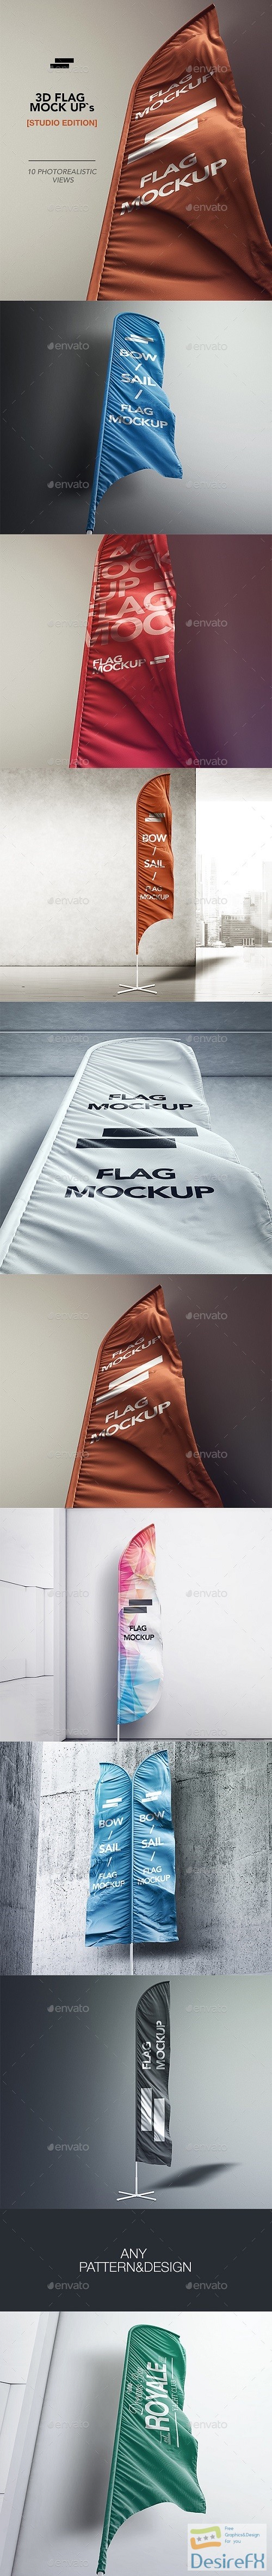 3D Flags Feather / Bow / Sail Flag Mockup 14064329